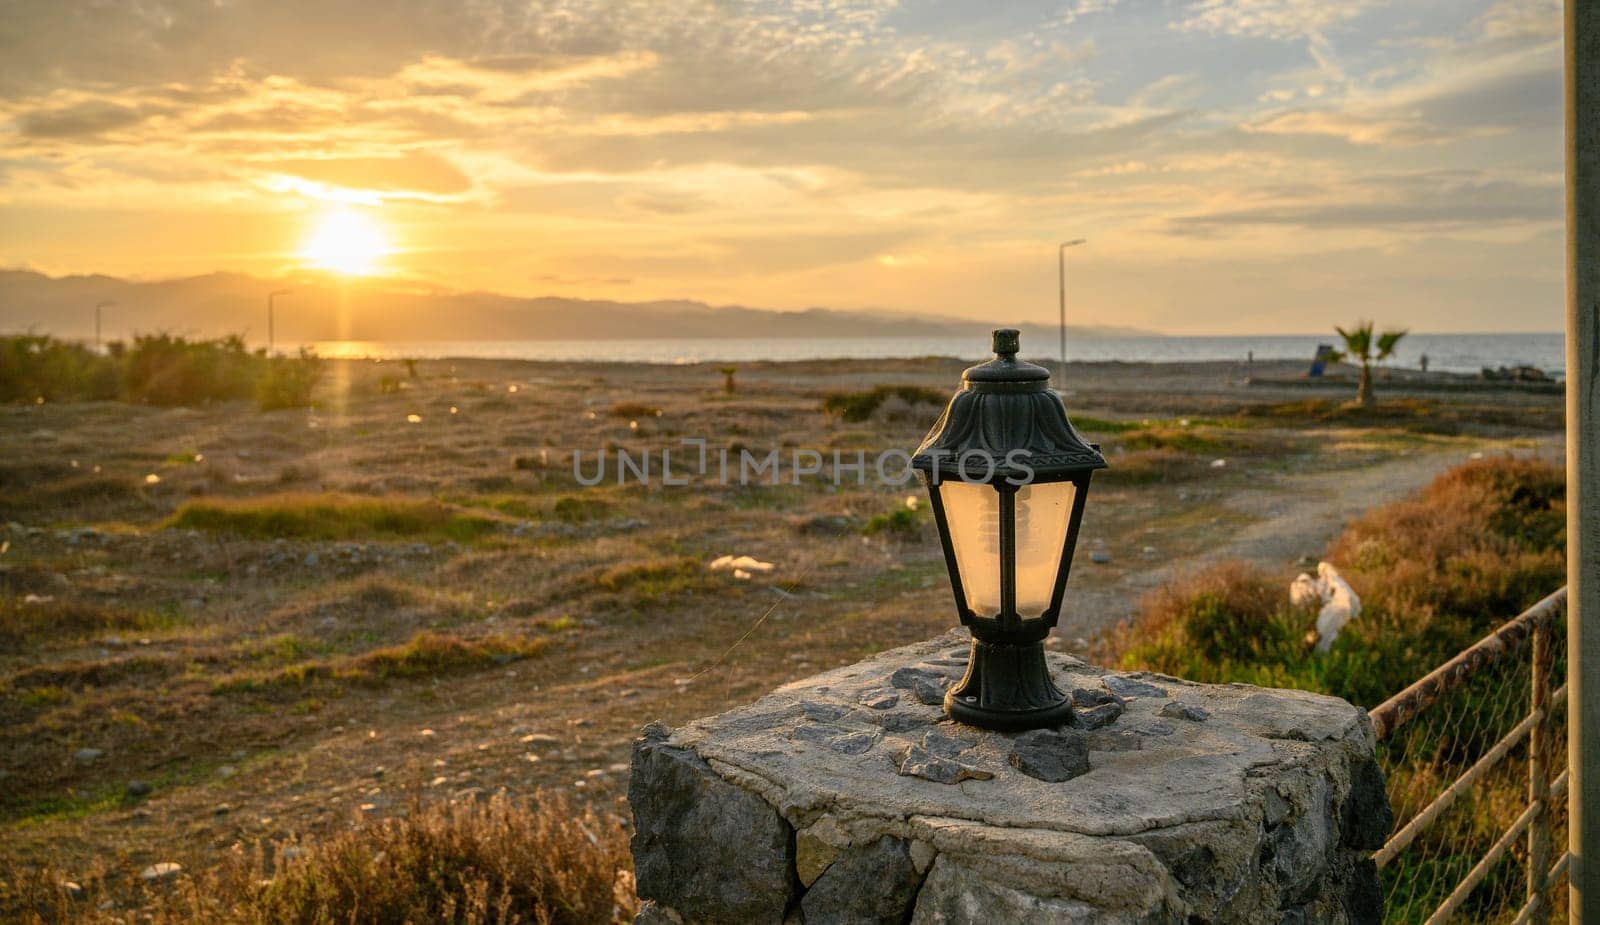 lantern on the fence at sunset